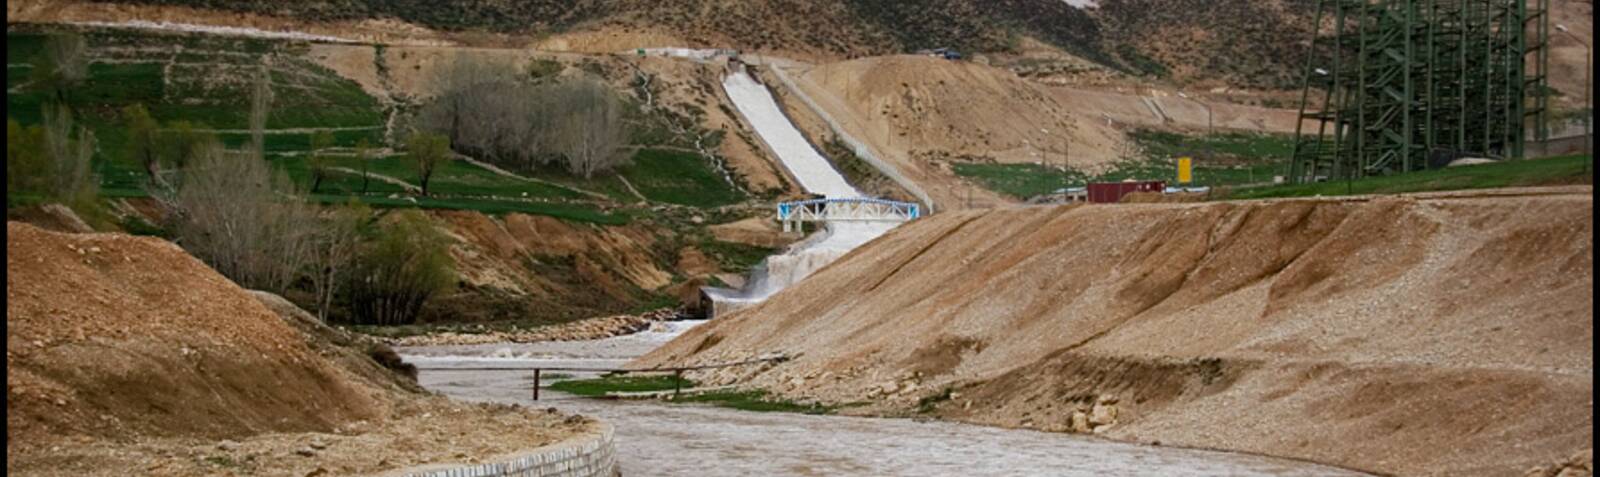 Koohrang 1 Dam